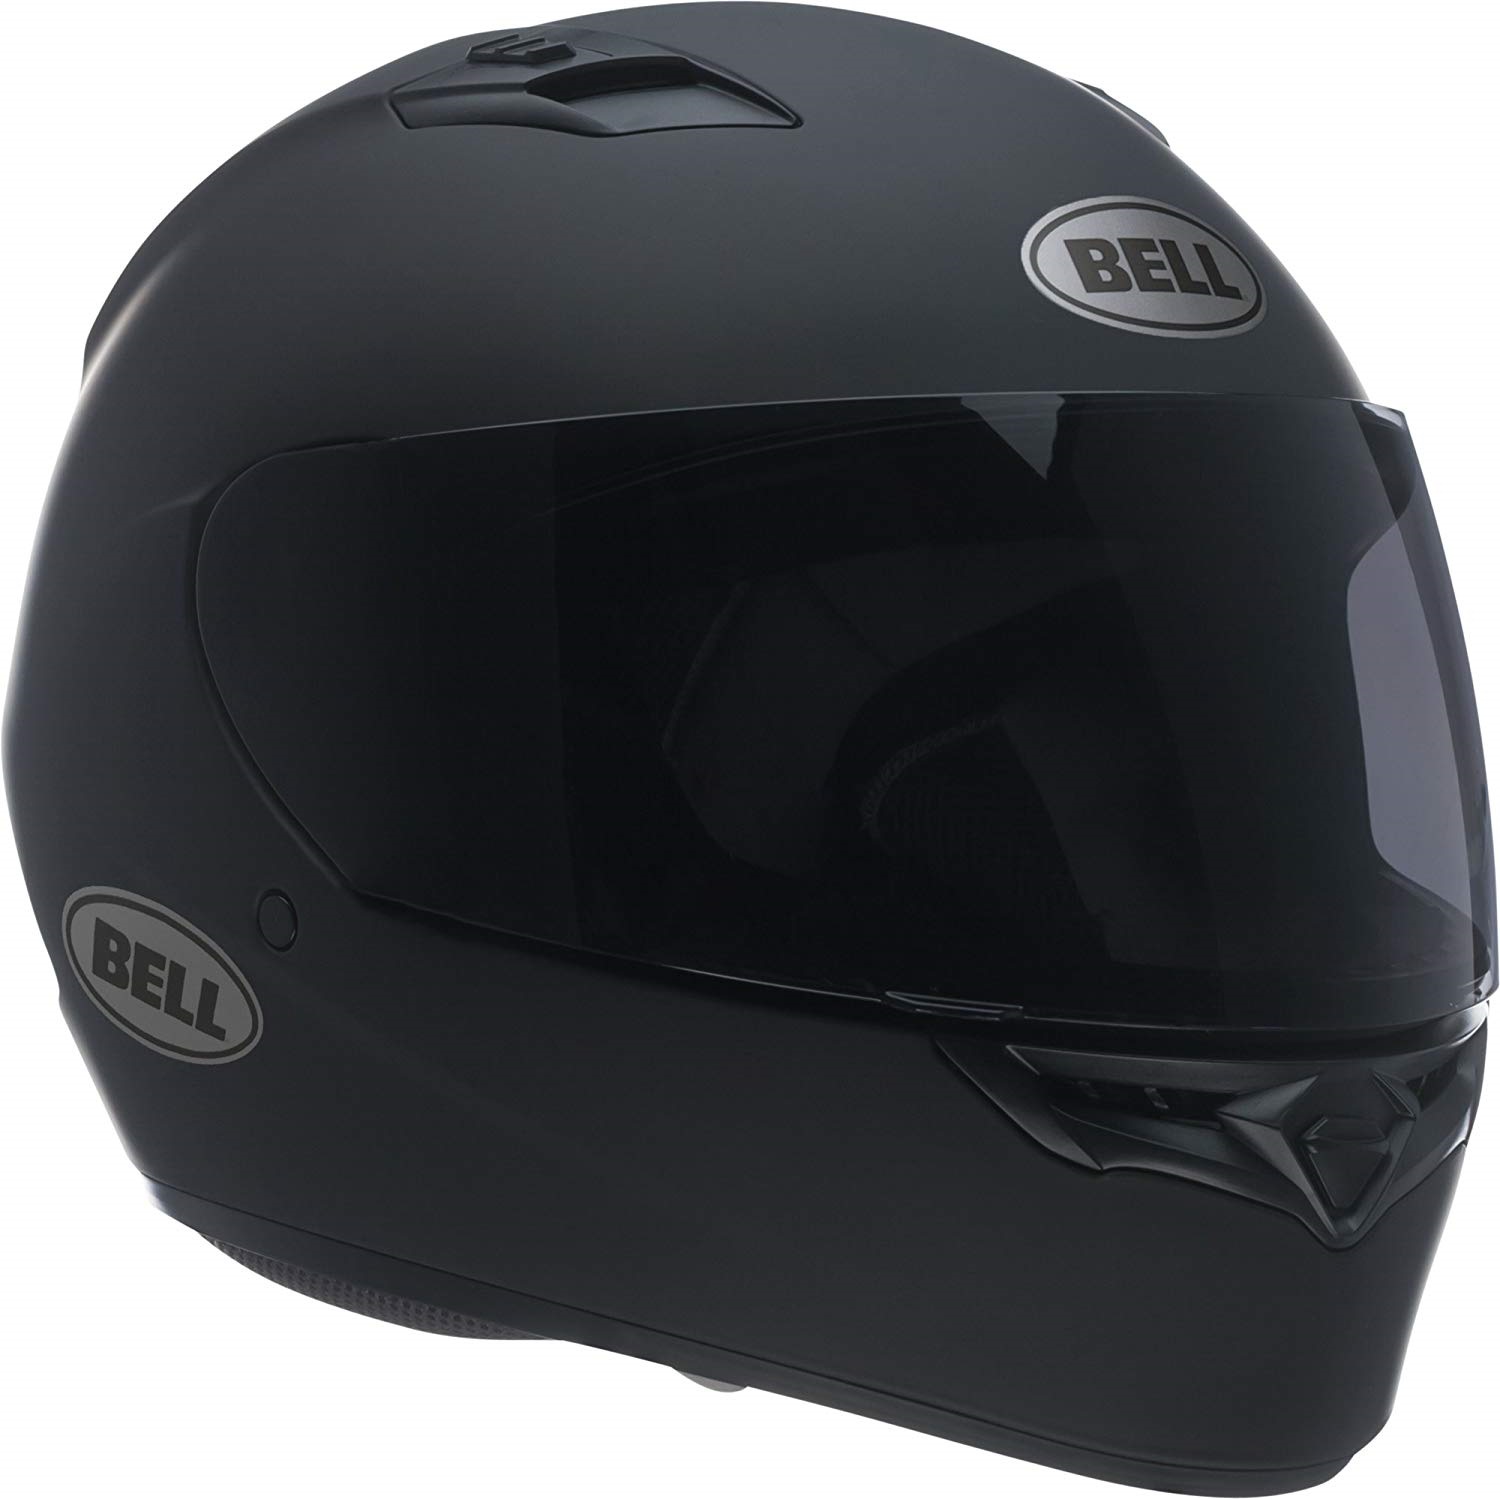 Bell Qualifier Helmet Best Motorcycle Helmet